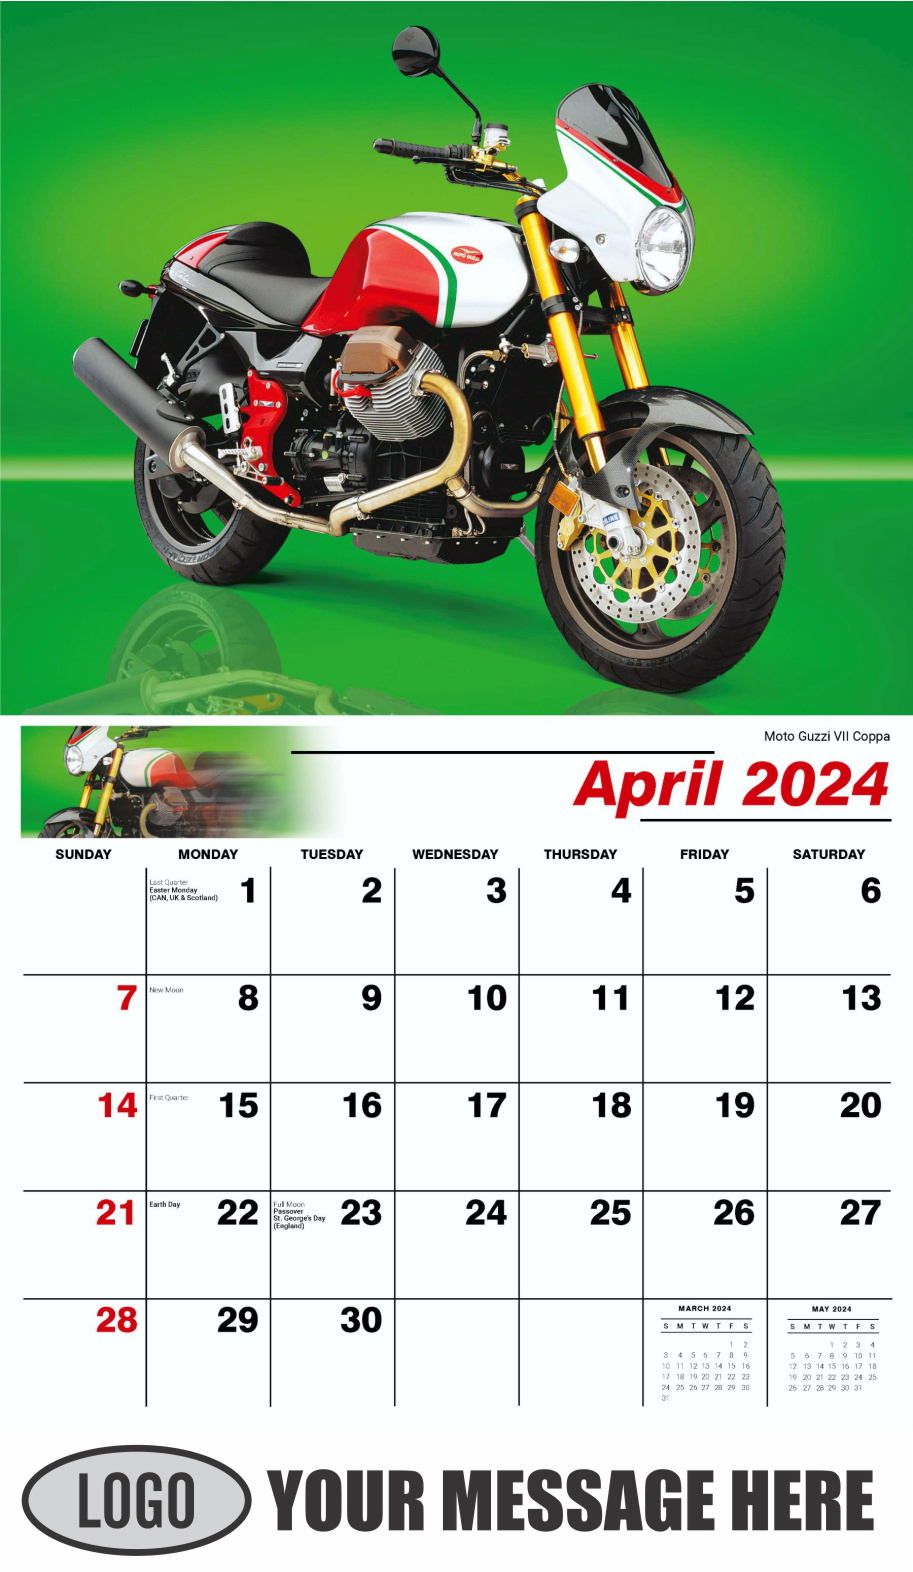 Motorcycle Mania 2024 Automotve Business Advertising Wall Calendar - April